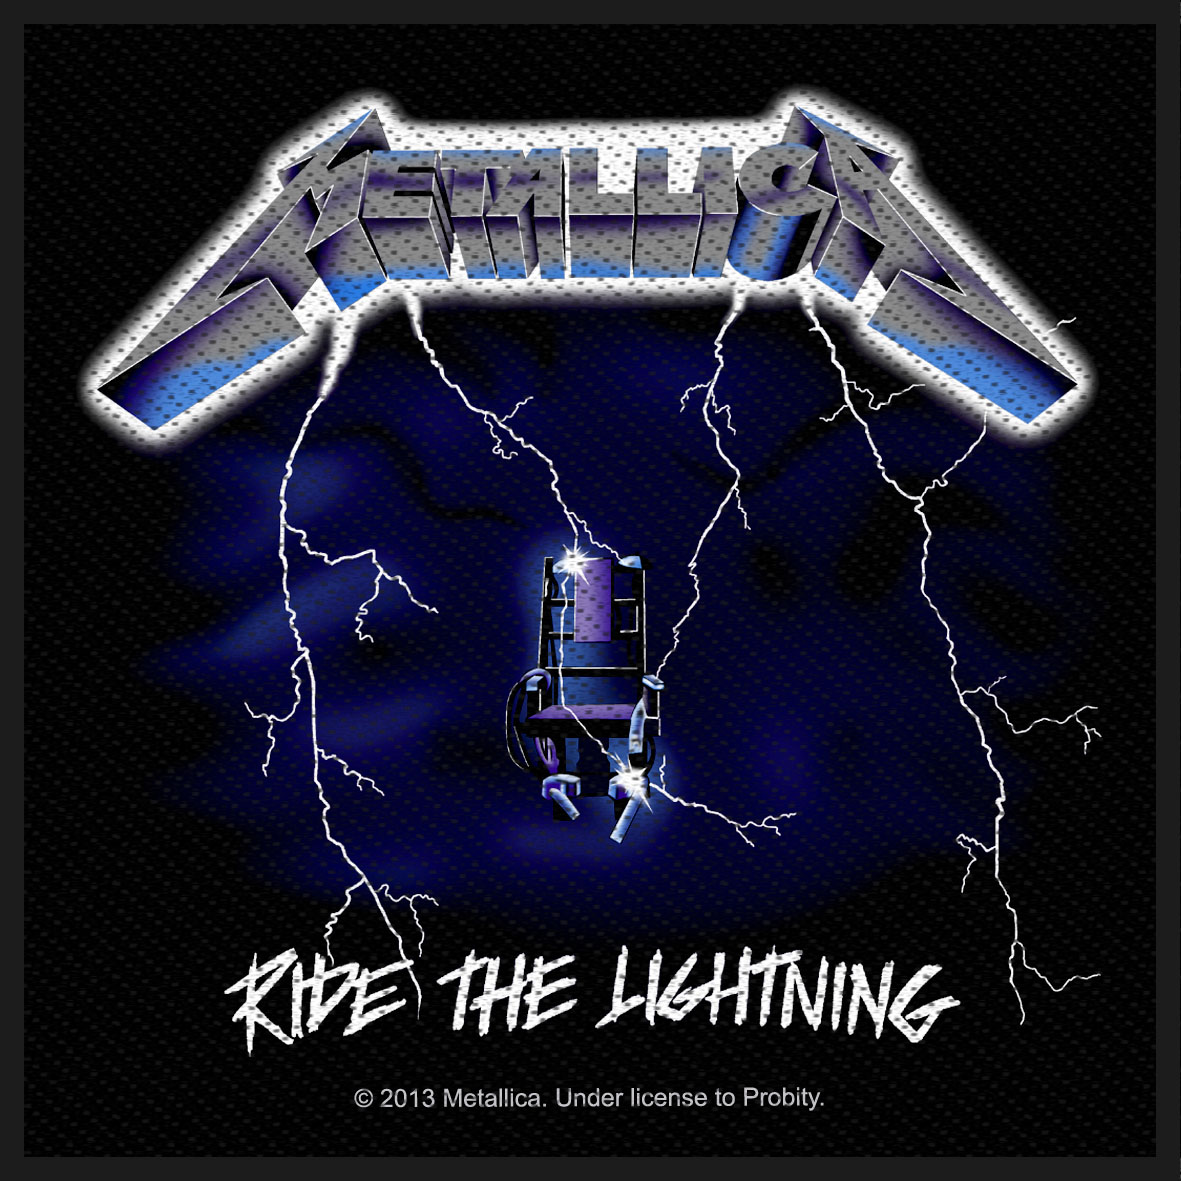 081 Metallica Ride the Light